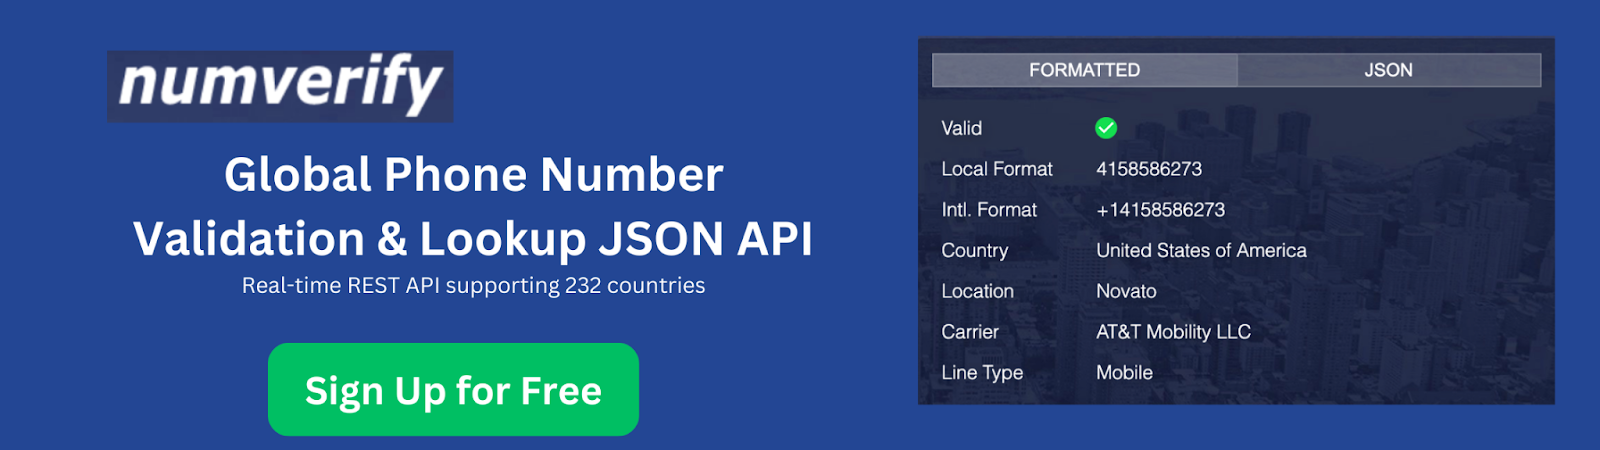 Numverify CTA Banner - Sign Up free for the Global Phone Number
Validation & Lookup JSON API